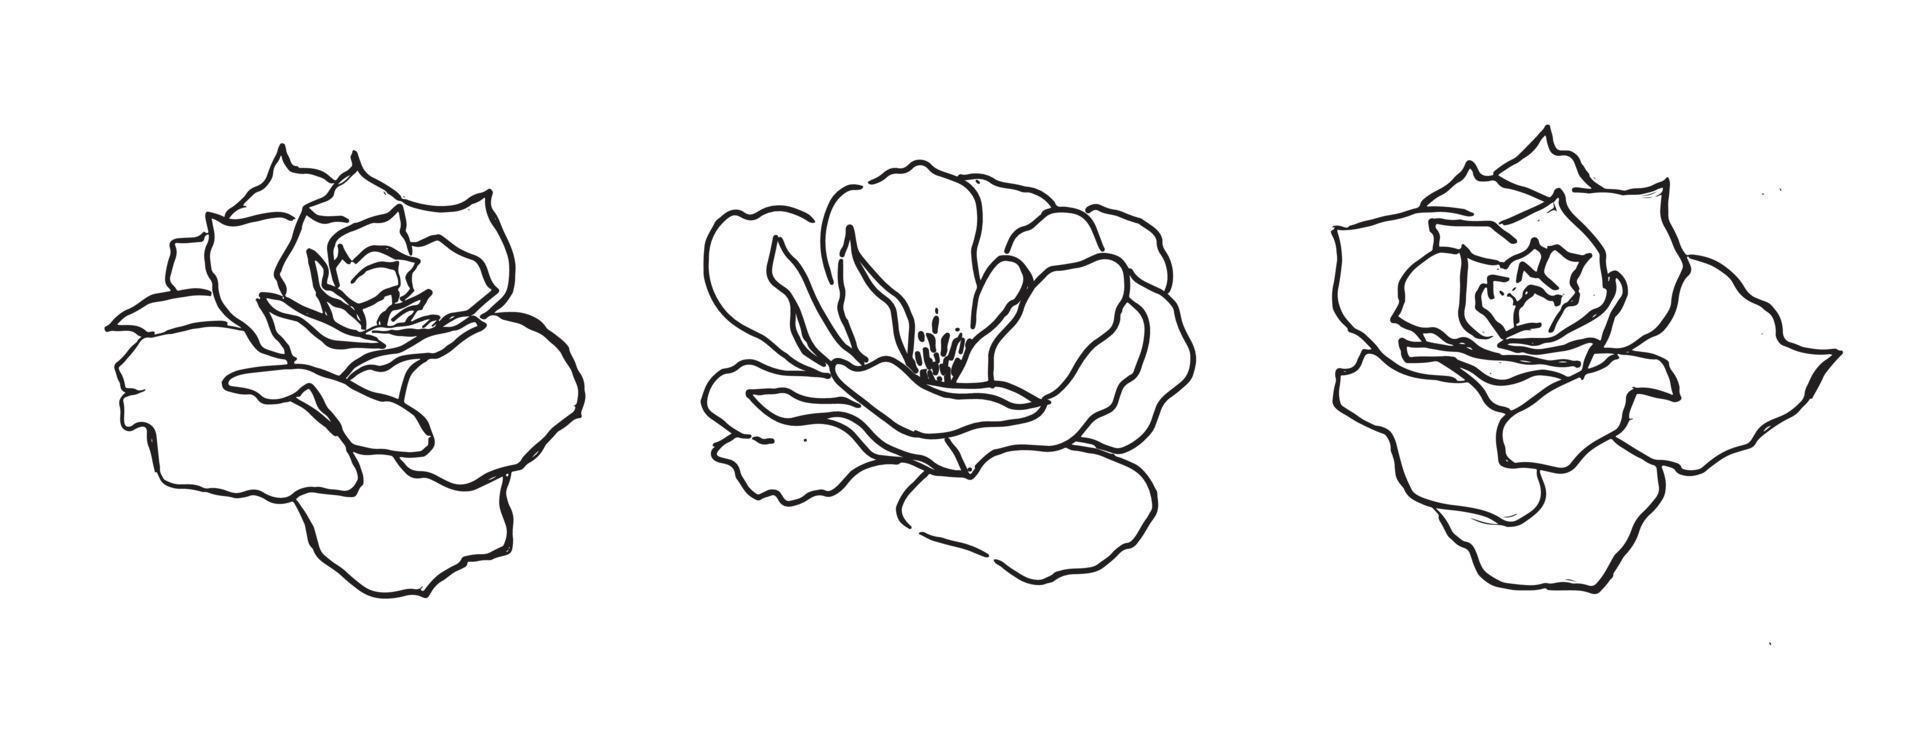 Rose flower, hand drawn illustration vector